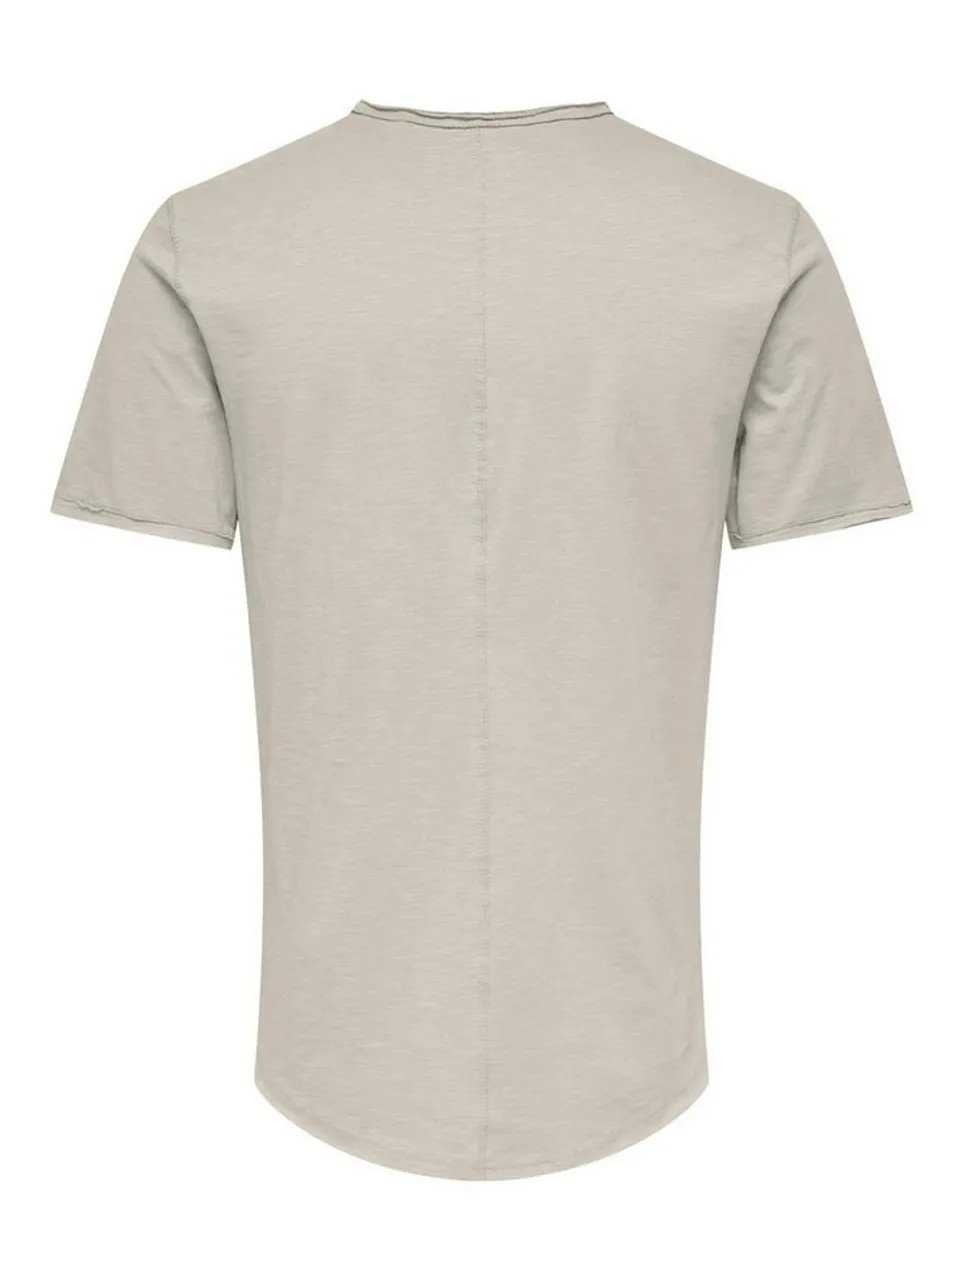 ONLY & SONS T-Shirt Langes Rundhals T-Shirt Einfarbiges Kurzarm Basic Shirt ONSBENNE 4783 in Beige-2